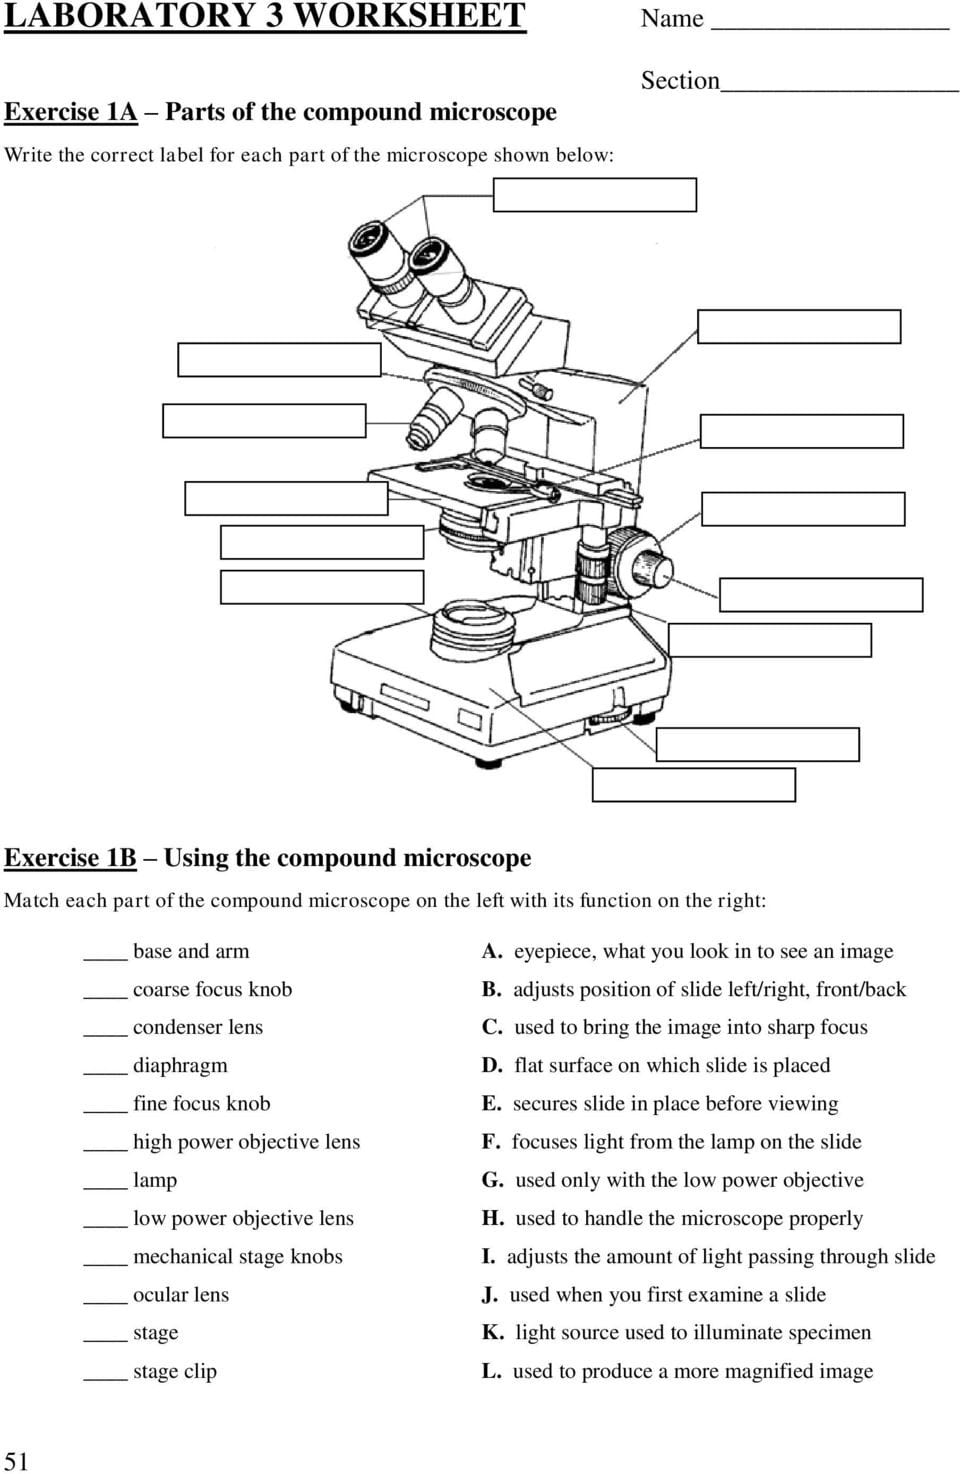 fingerprint-lab-answer-key-lab-3-use-of-the-microscope-pdf-db-excel-carisca-wallpaper